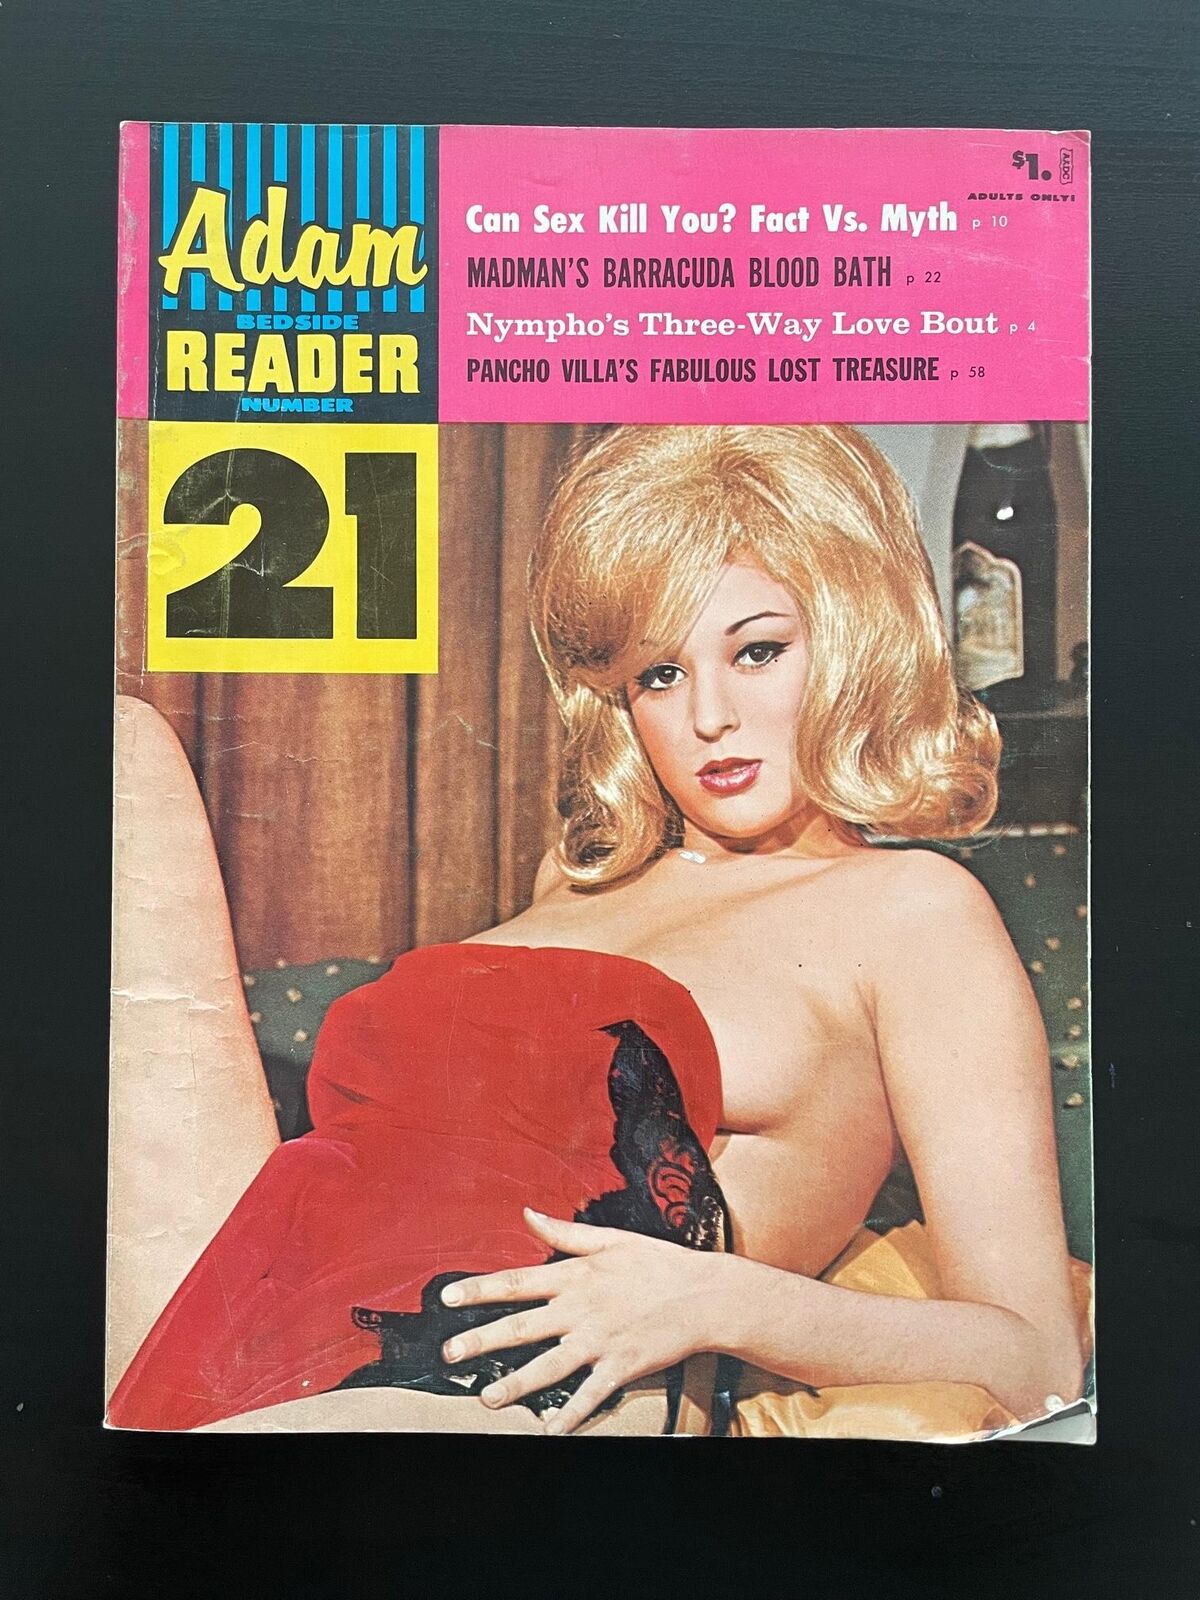 Adam Bedside Reader Vol.1 No.21 Knight Publishing Co.1965 